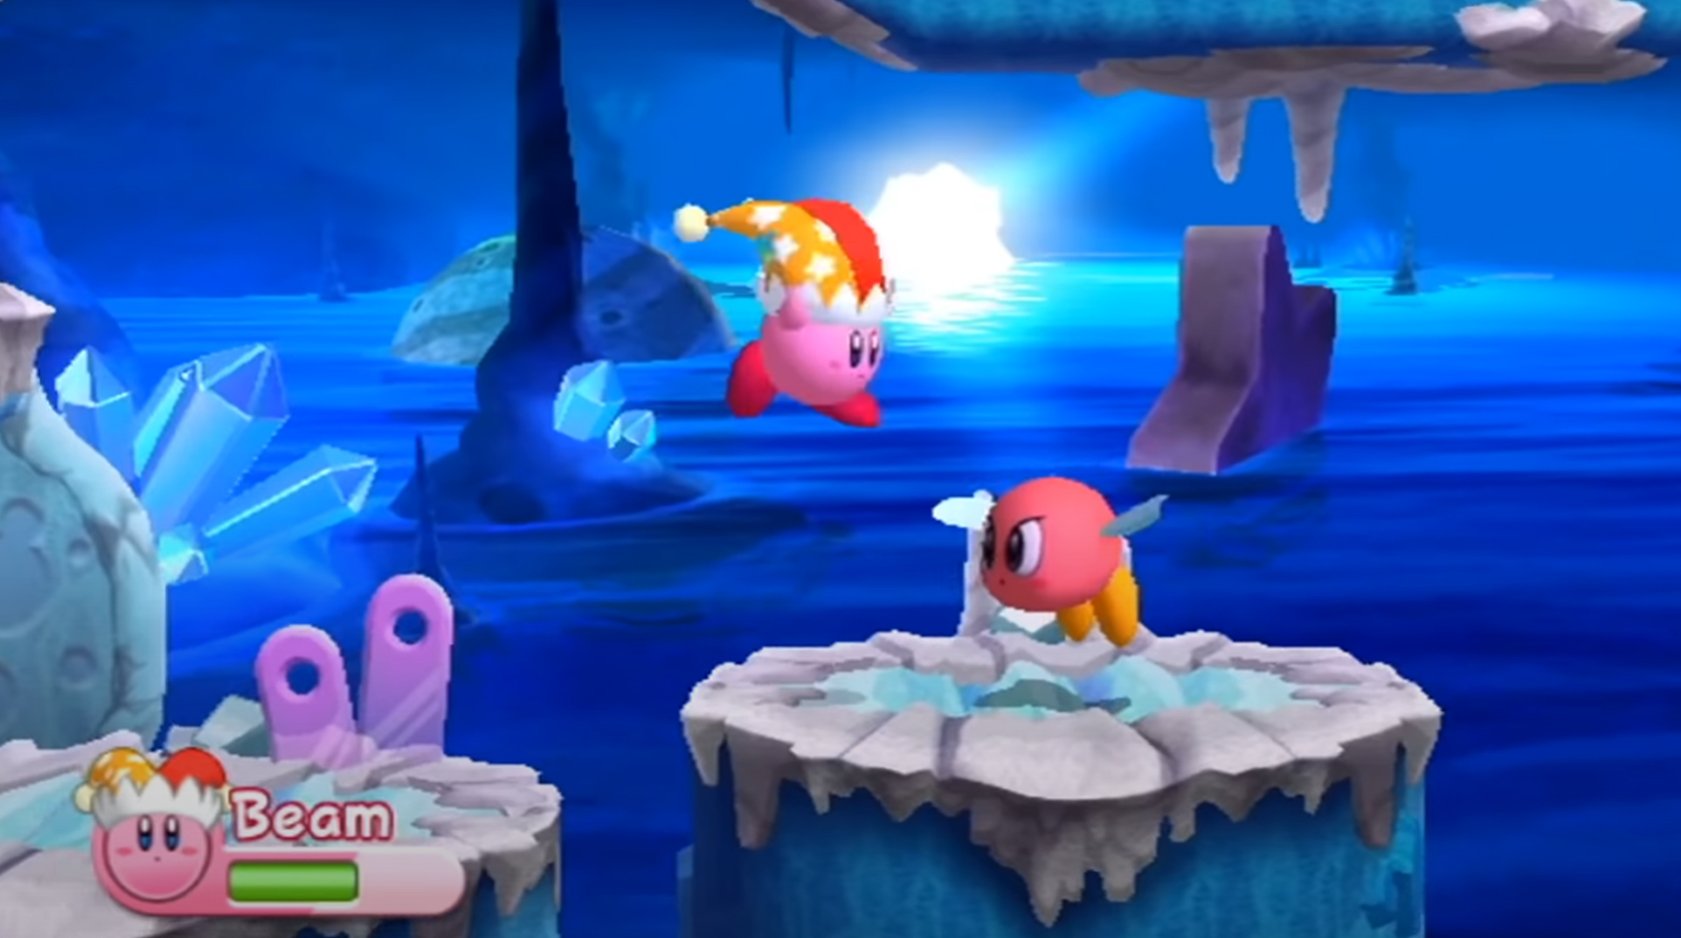 Kirby Return To Dream Land